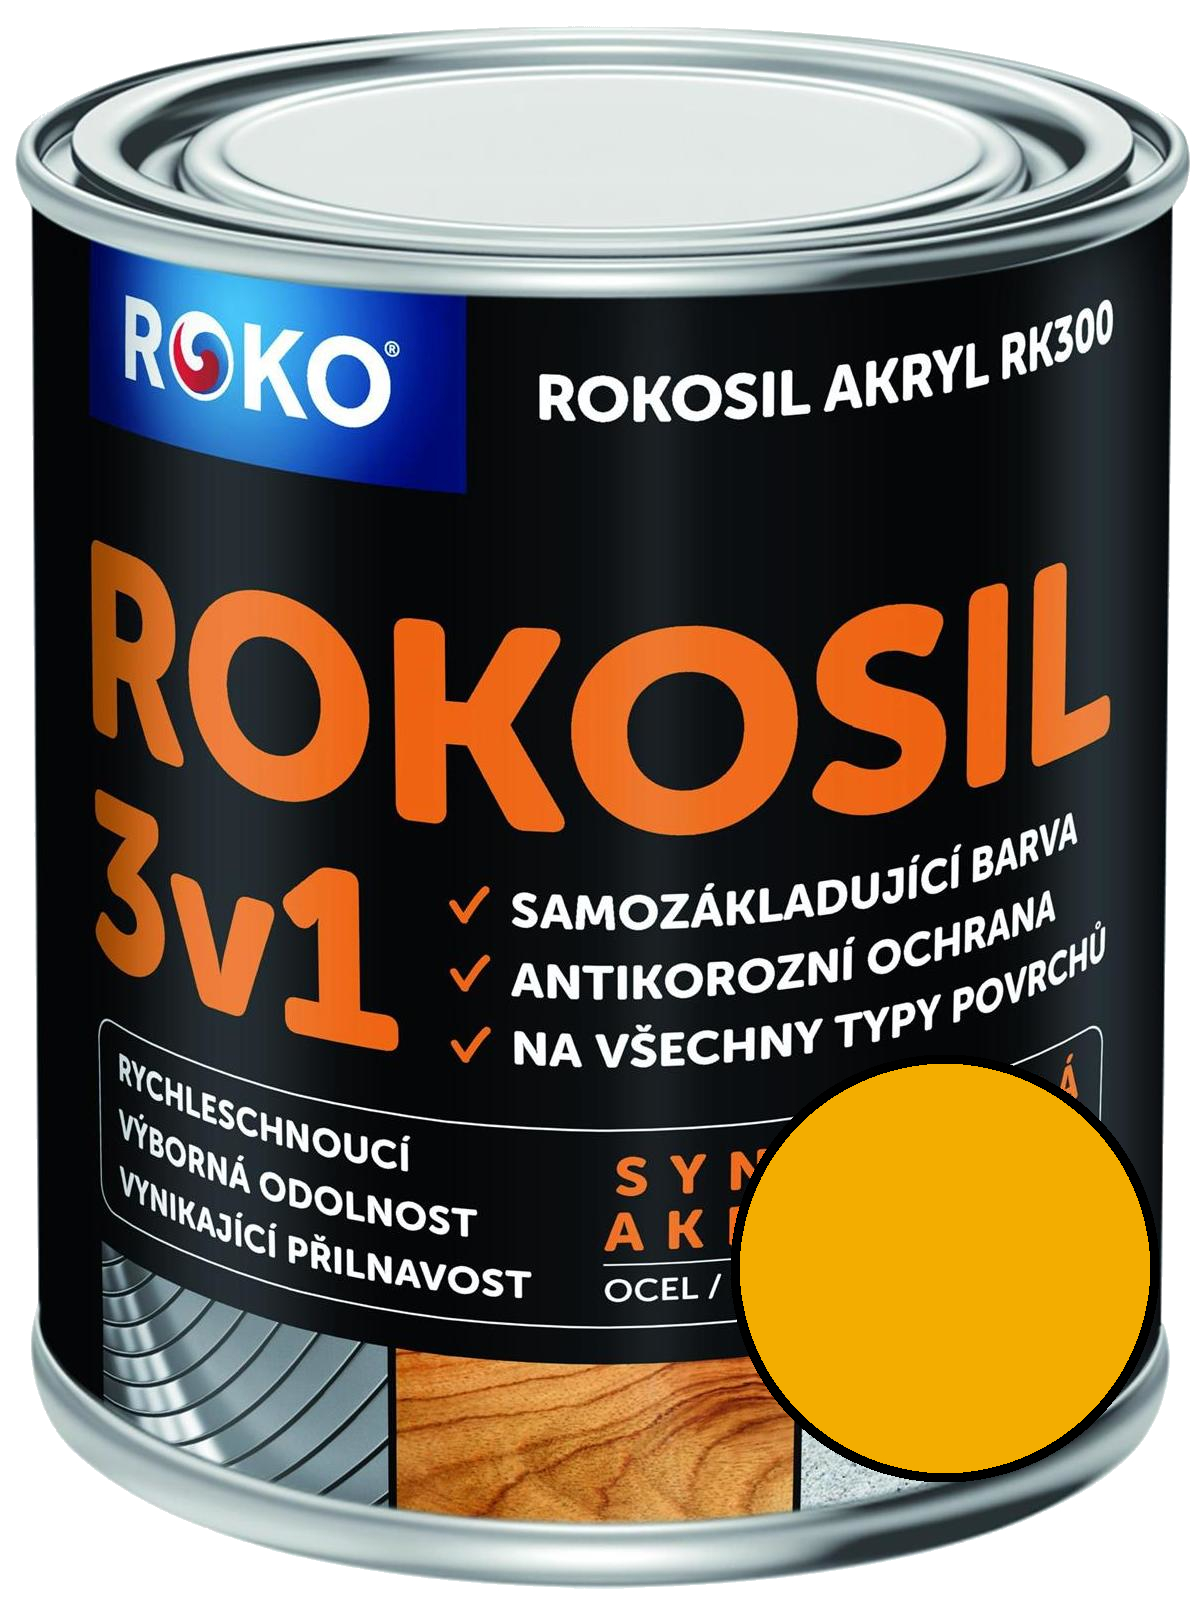 Barva samozákladující Rokosil akryl 3v1 RK 300 6200 žlutá světlá